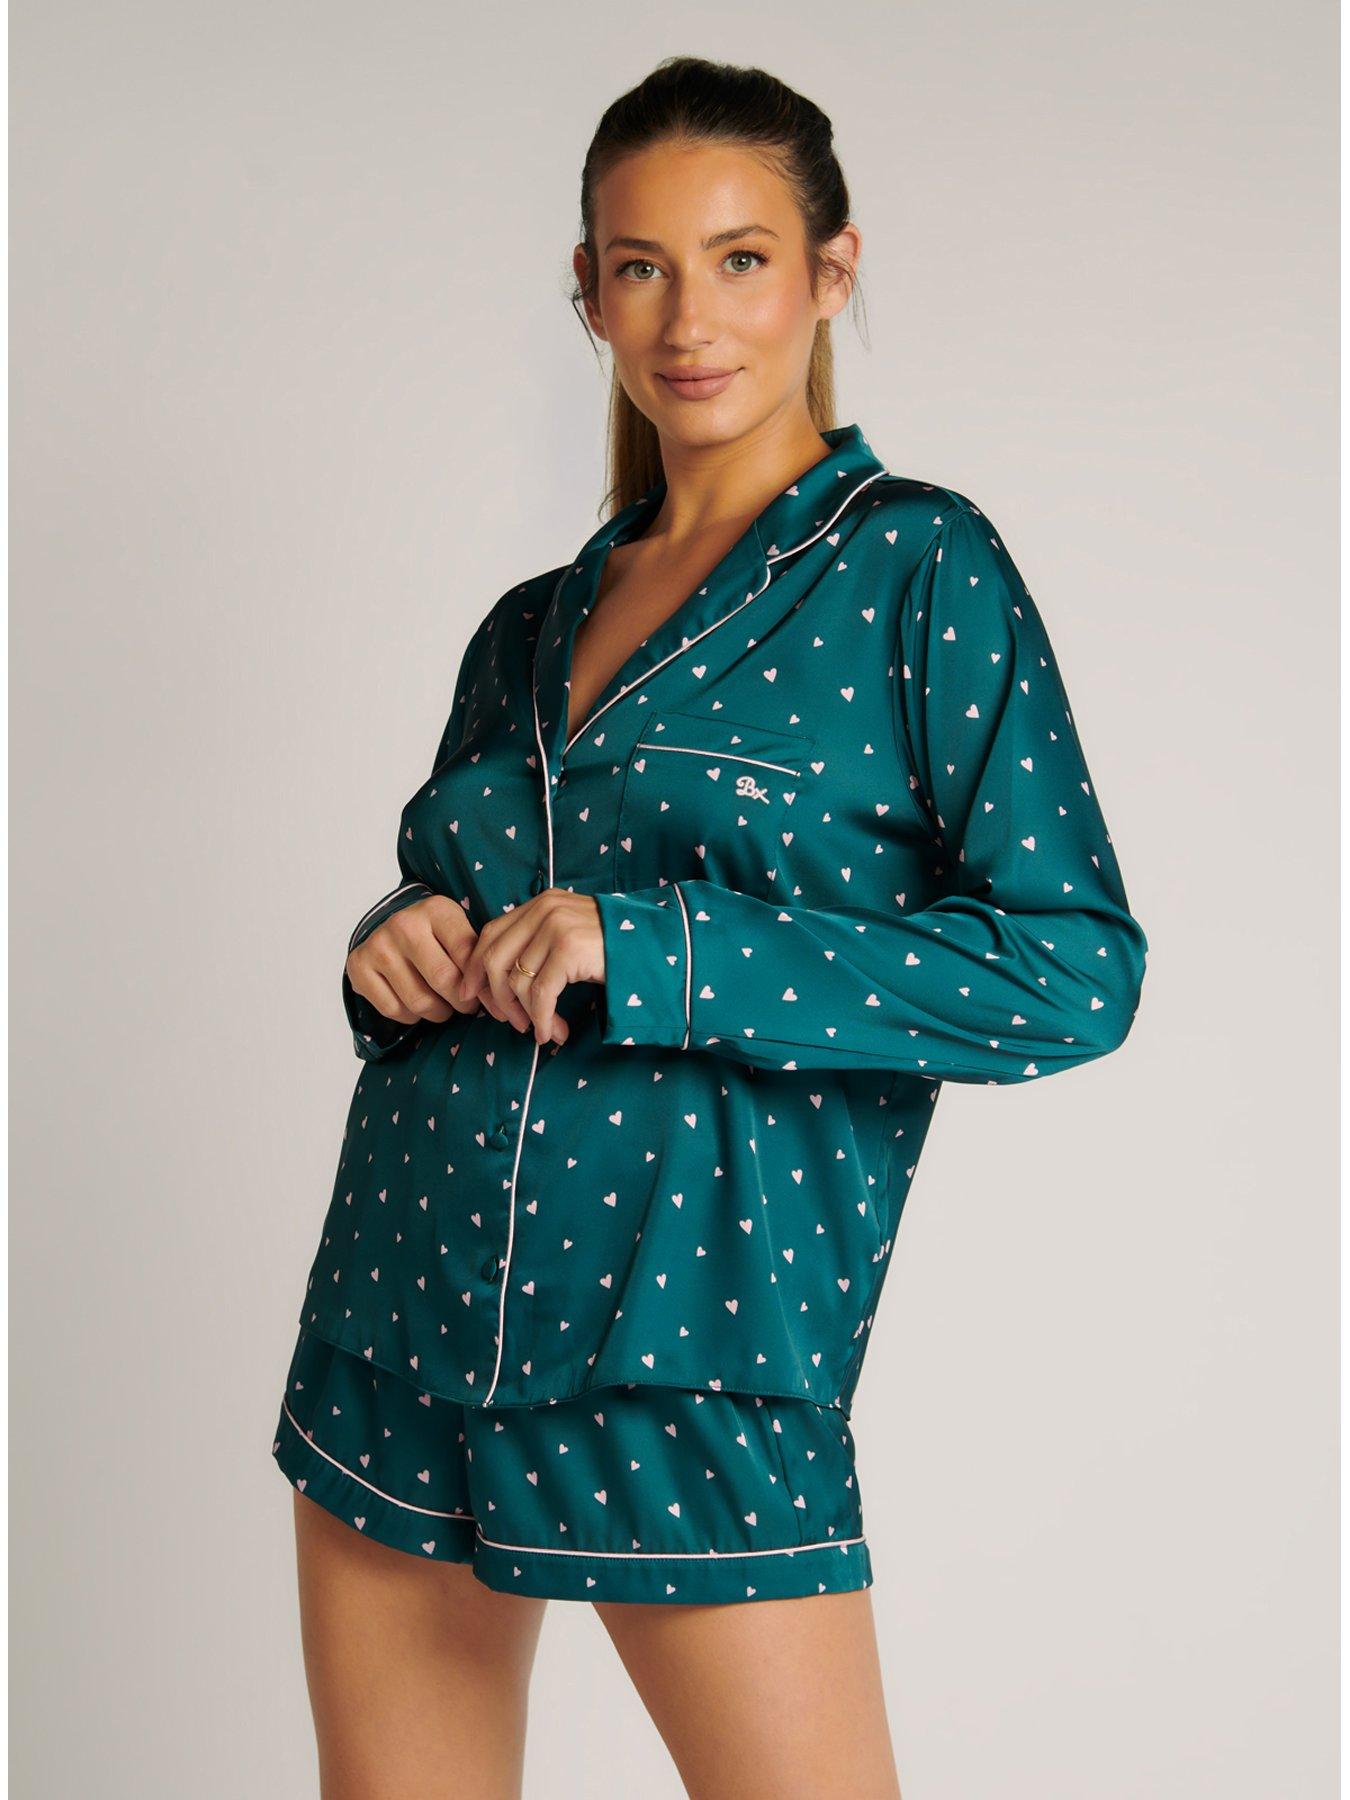 Boux Avenue Heart Print Long Sleeve & Short Pyjama Set - Emerald